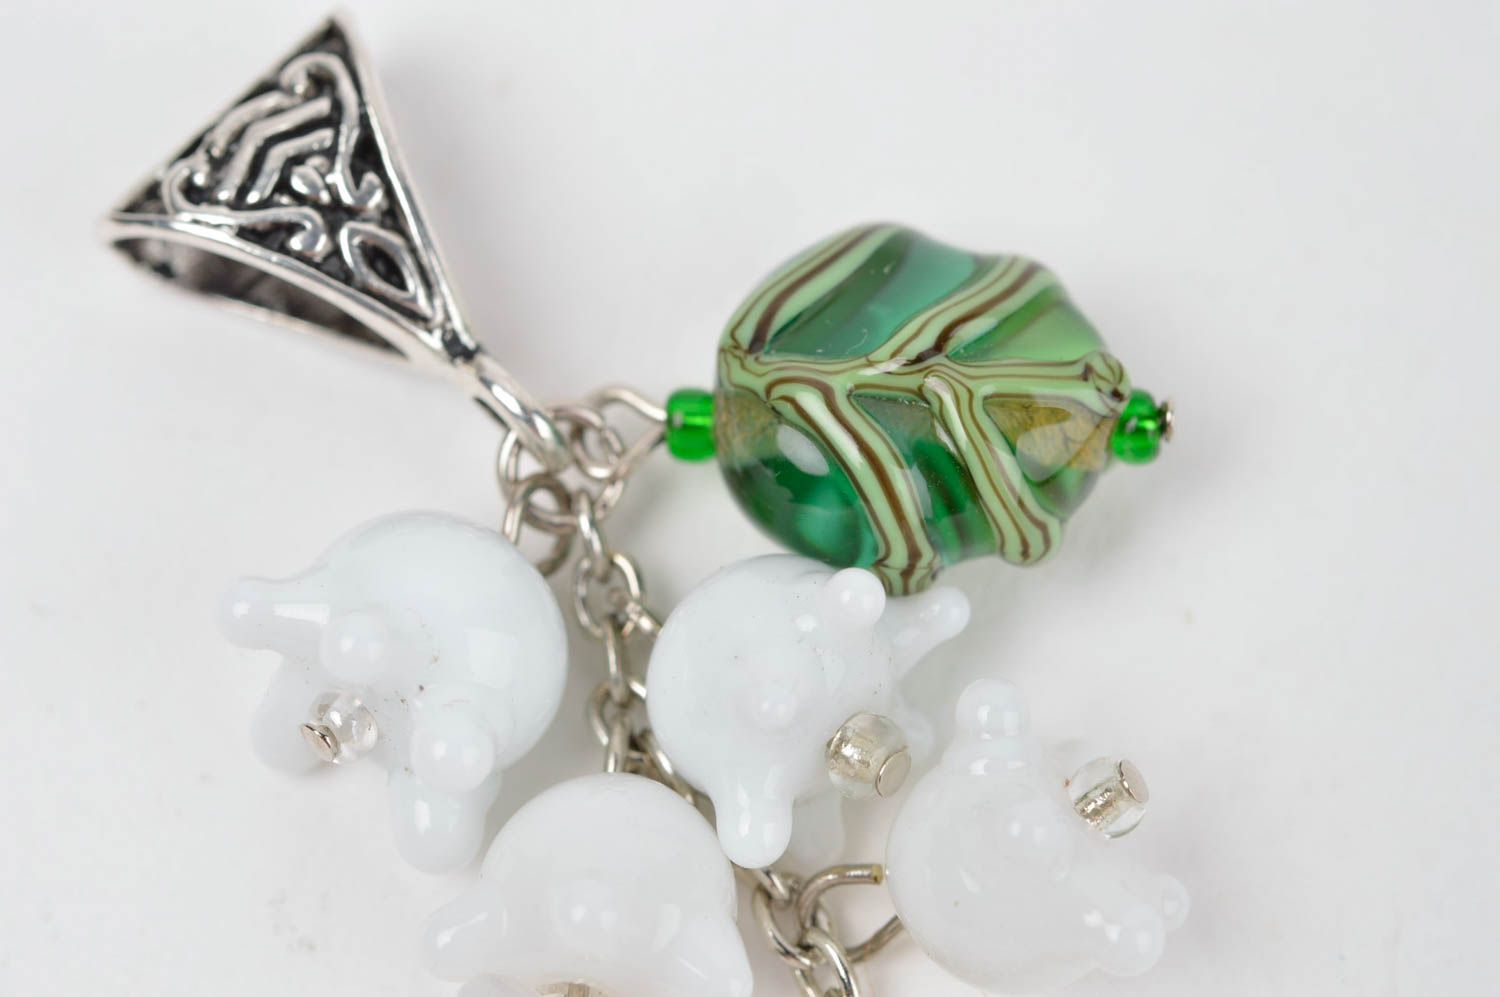 Unusual handmade beaded pendant glass bead pendant designer jewelry gift ideas photo 5